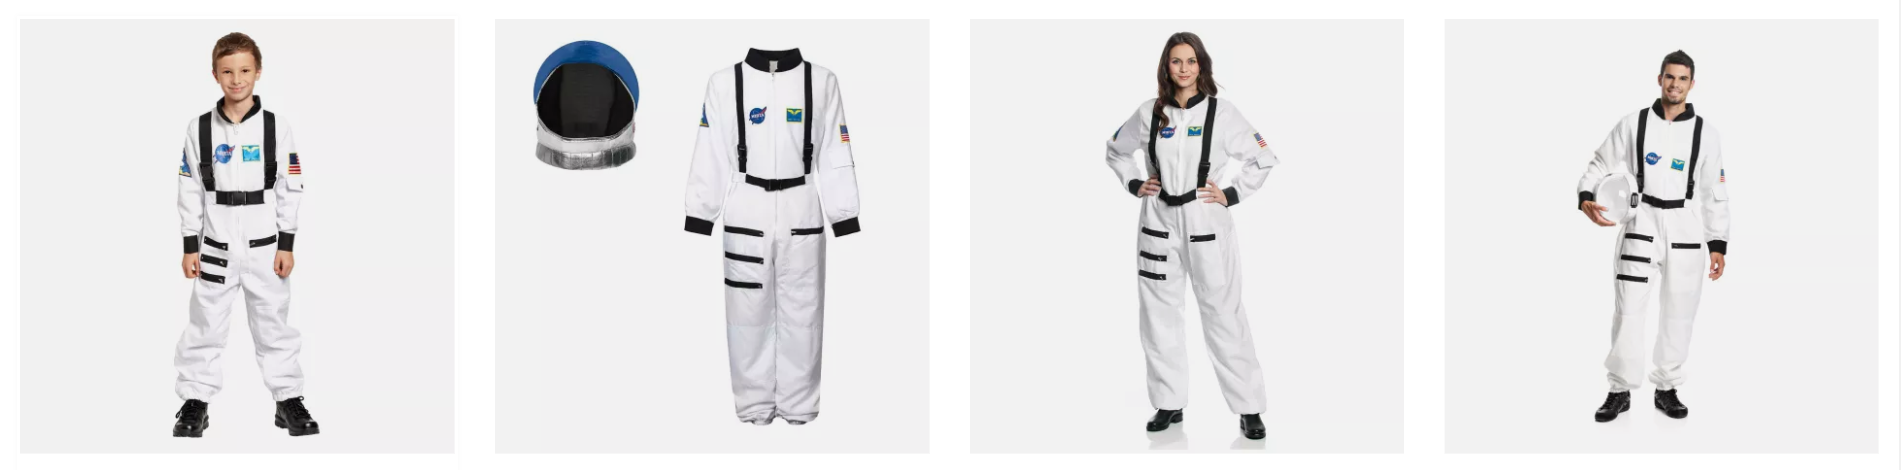 Astronaut Kostüme